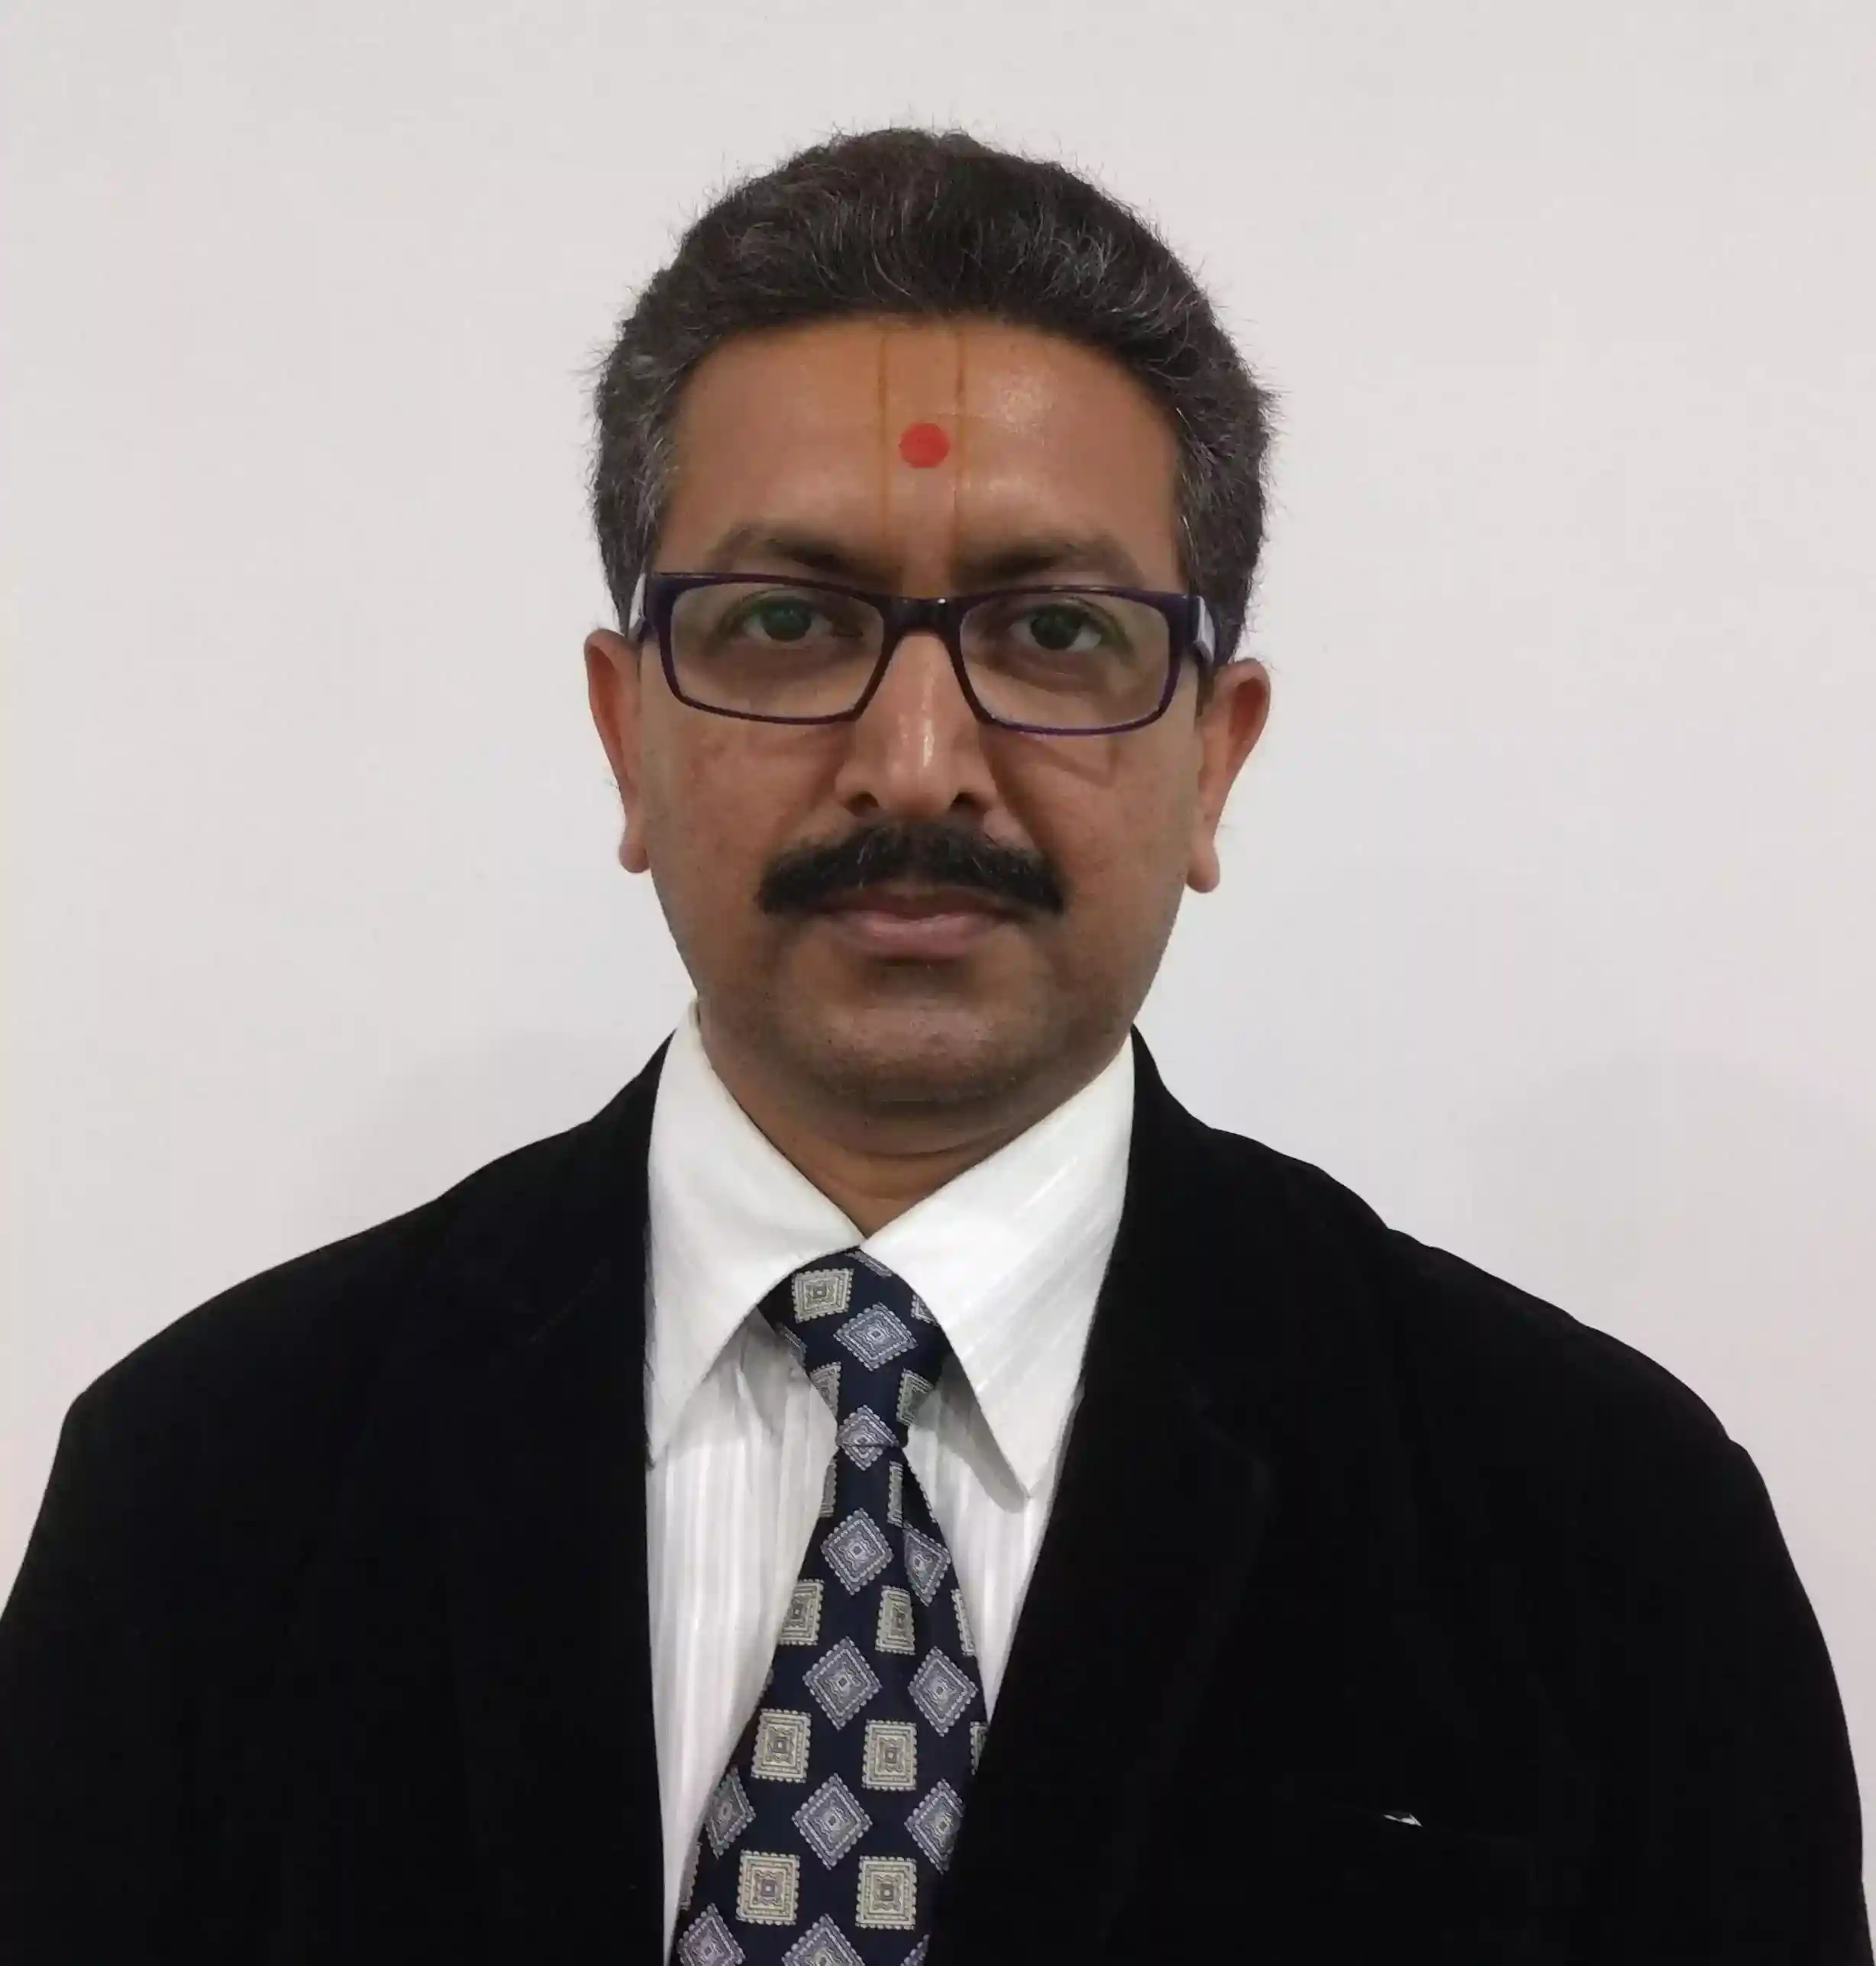 Dr. Chetankumar Patel, at RK University